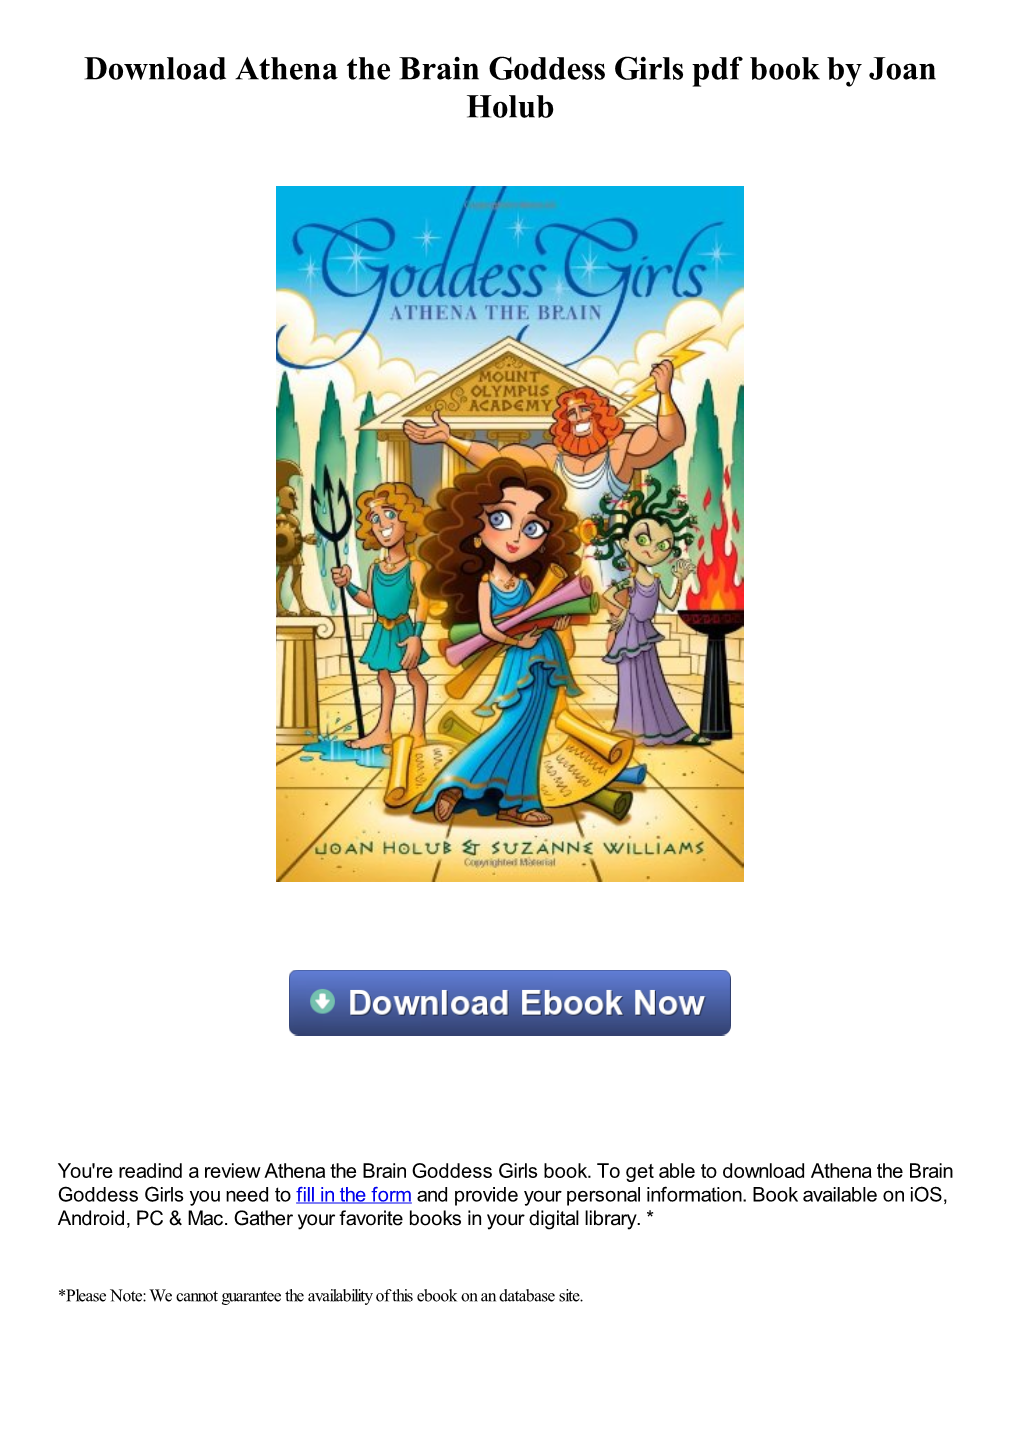 Download Athena the Brain Goddess Girls Pdf Book by Joan Holub